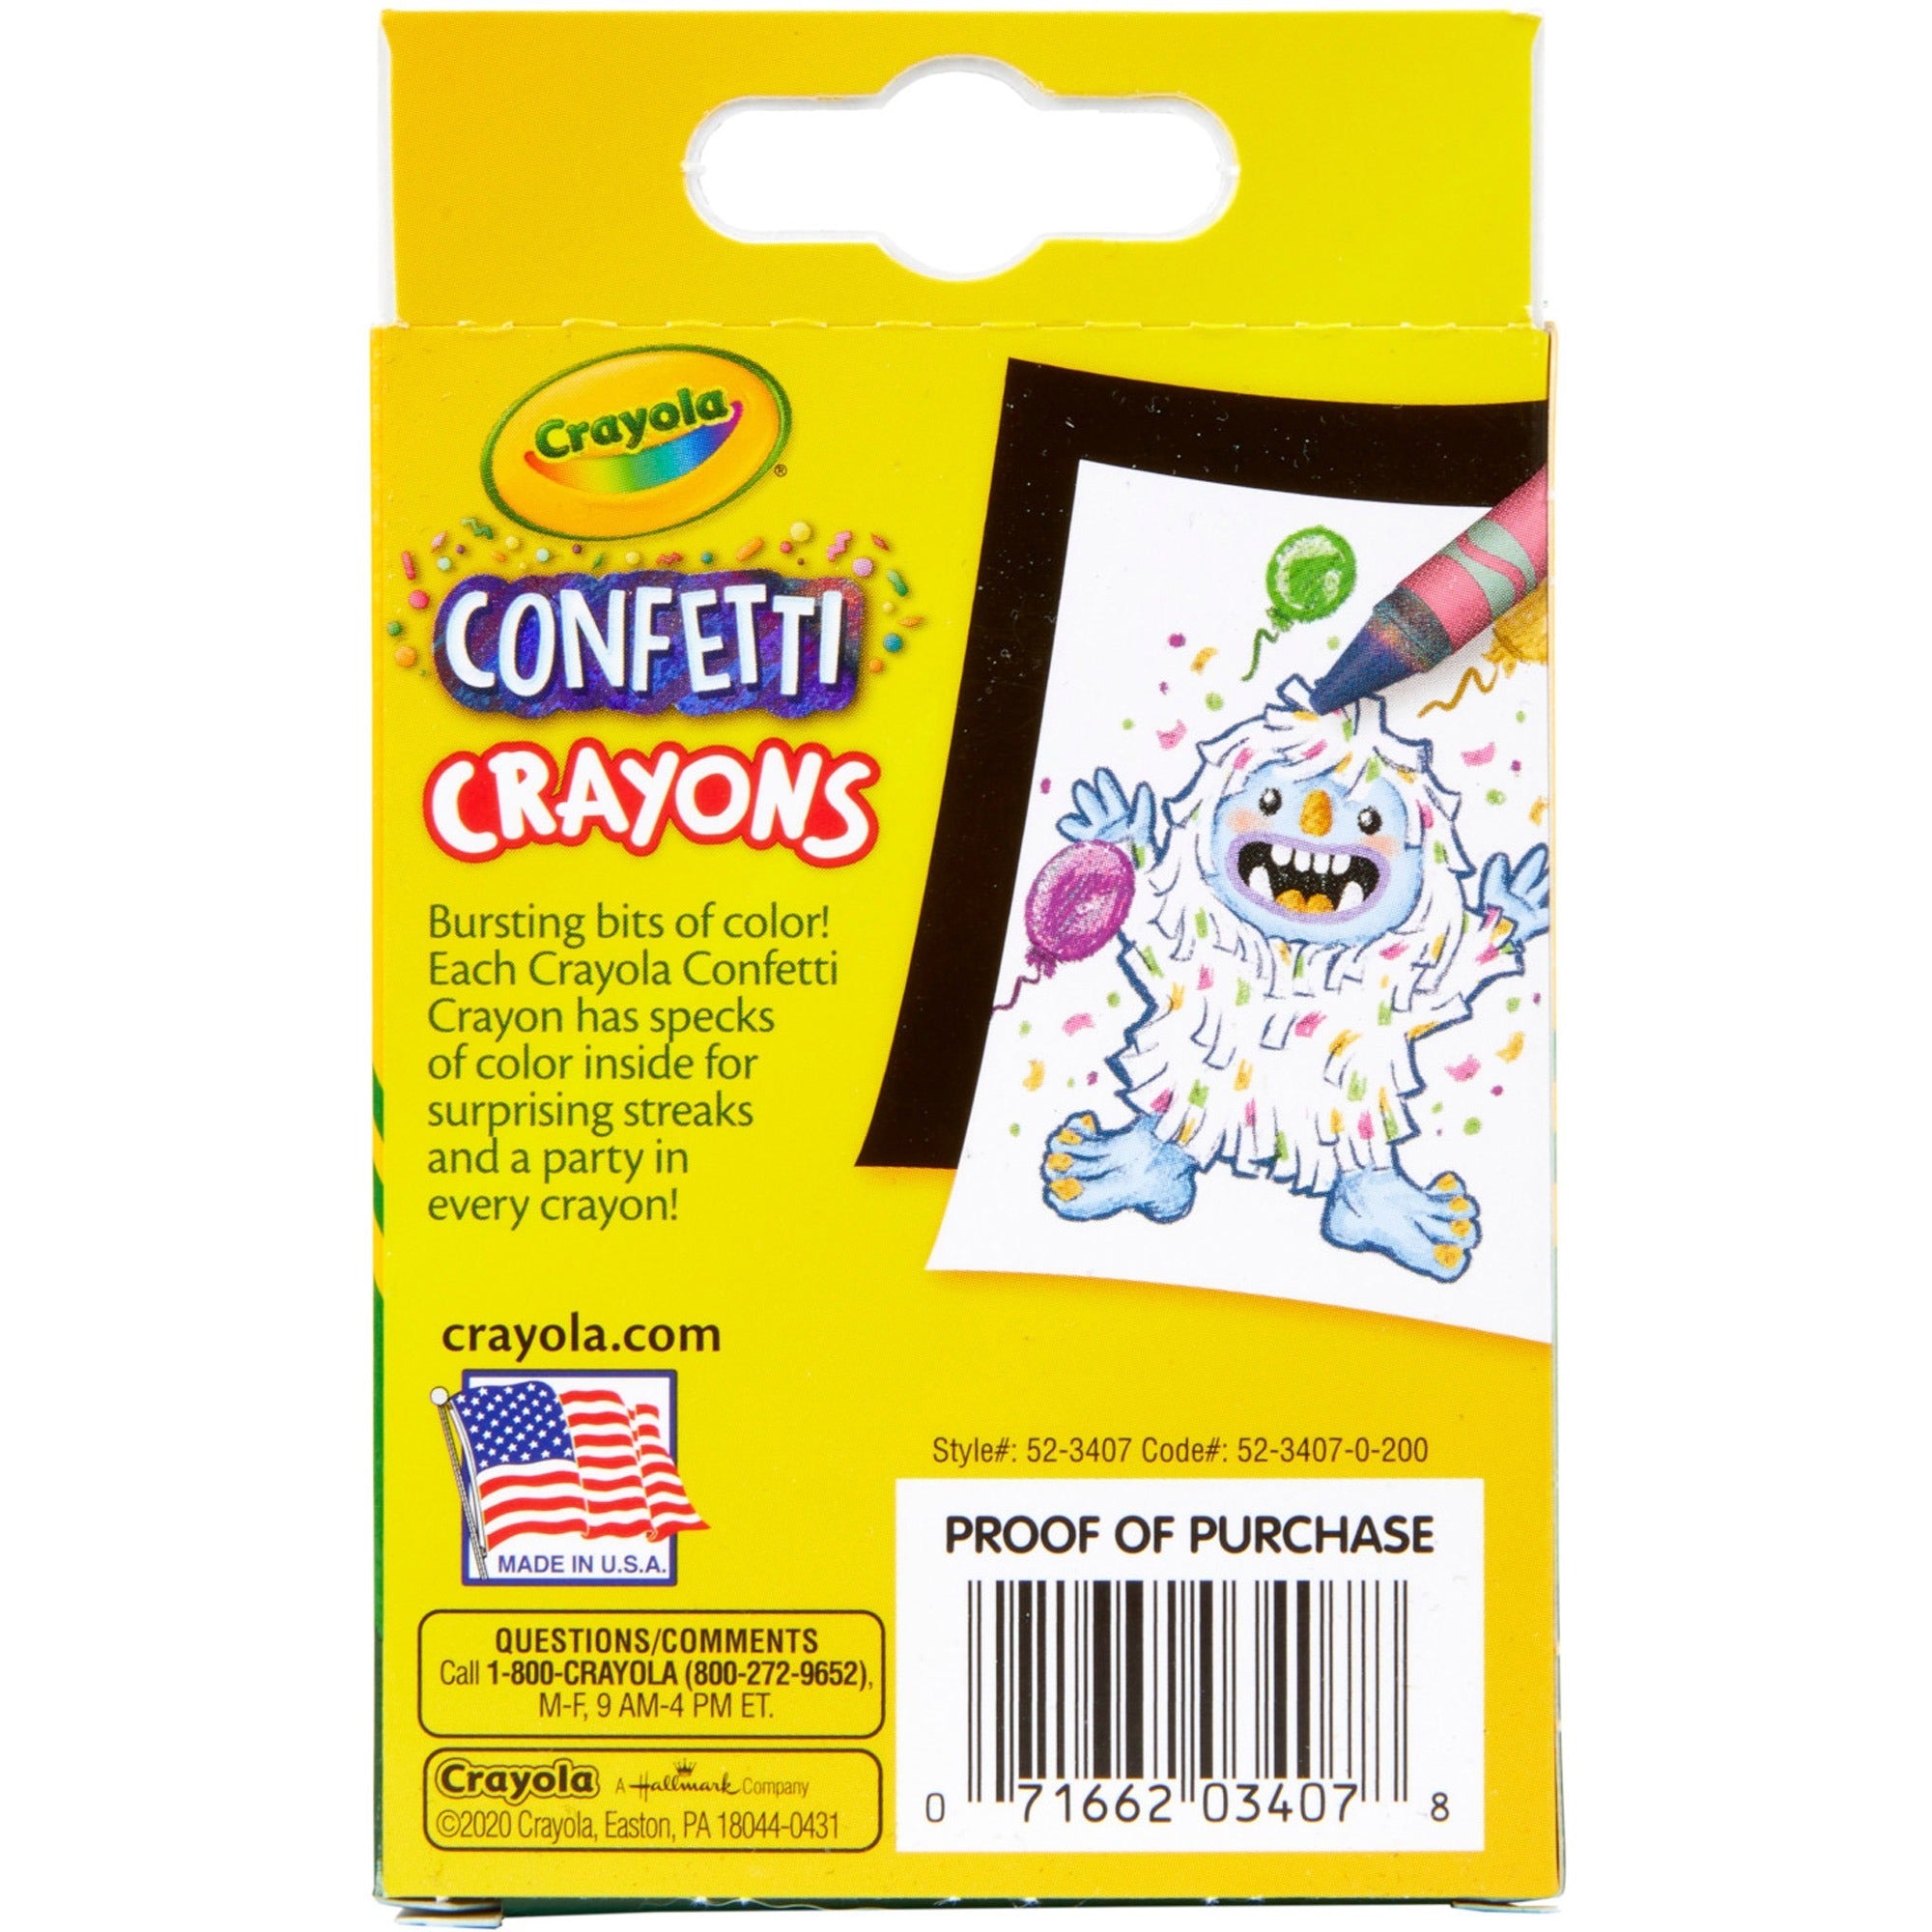 crayola-confetti-crayons-2-length-multi-24-pack_cyo523407 - 2